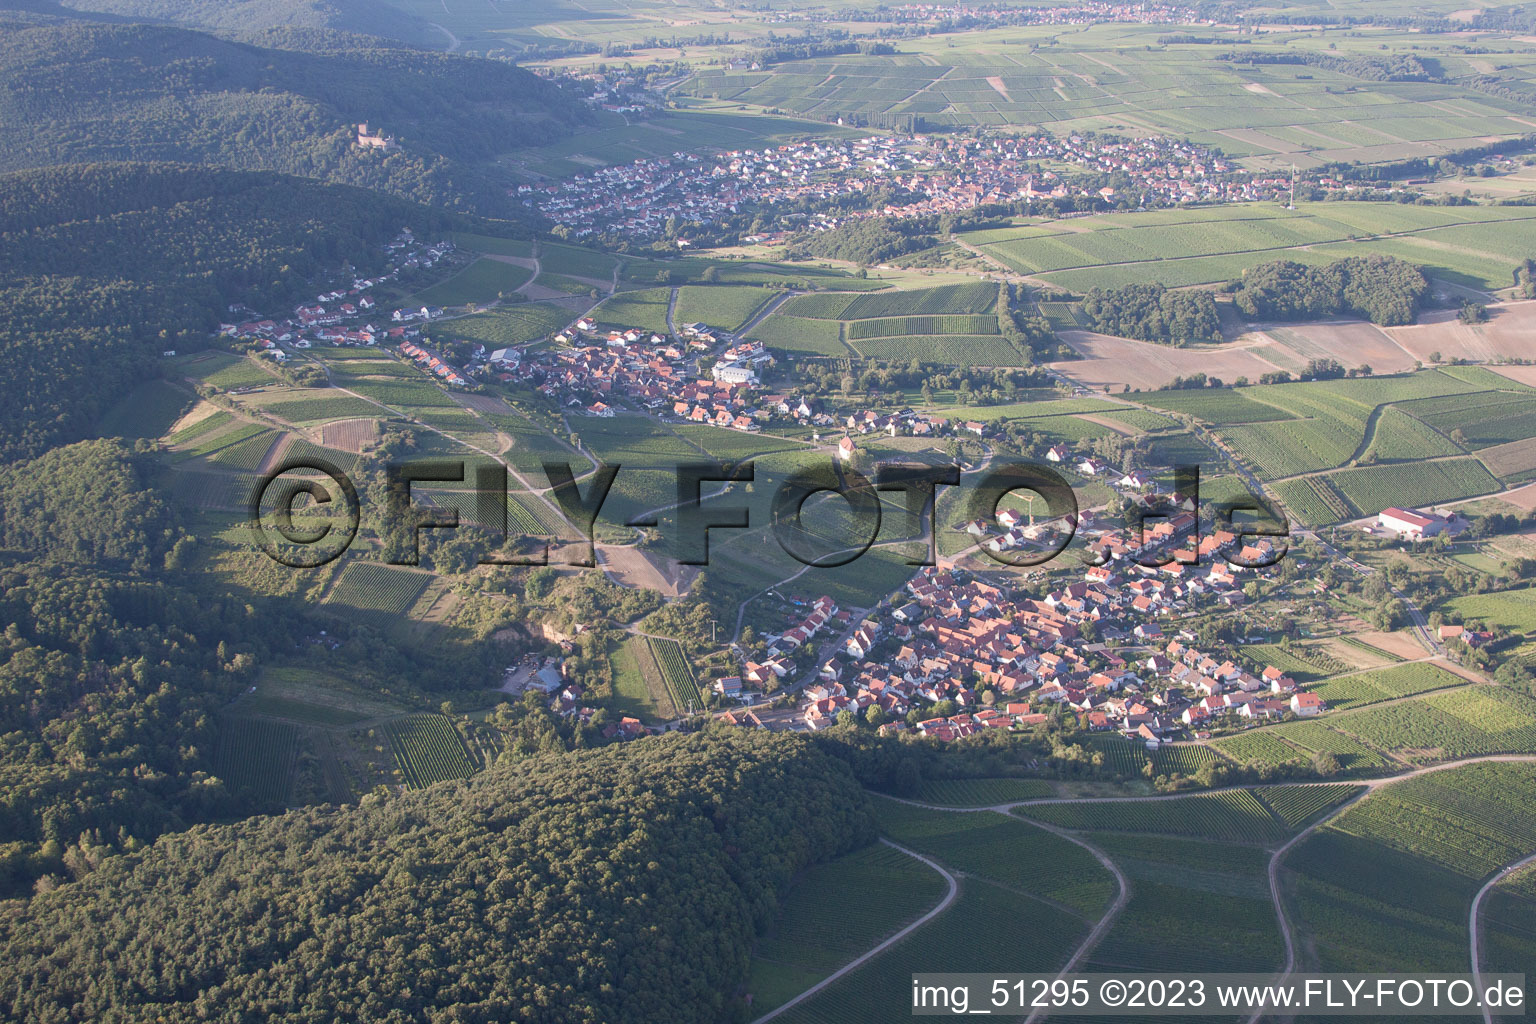 Bird's eye view of District Gleishorbach in Gleiszellen-Gleishorbach in the state Rhineland-Palatinate, Germany